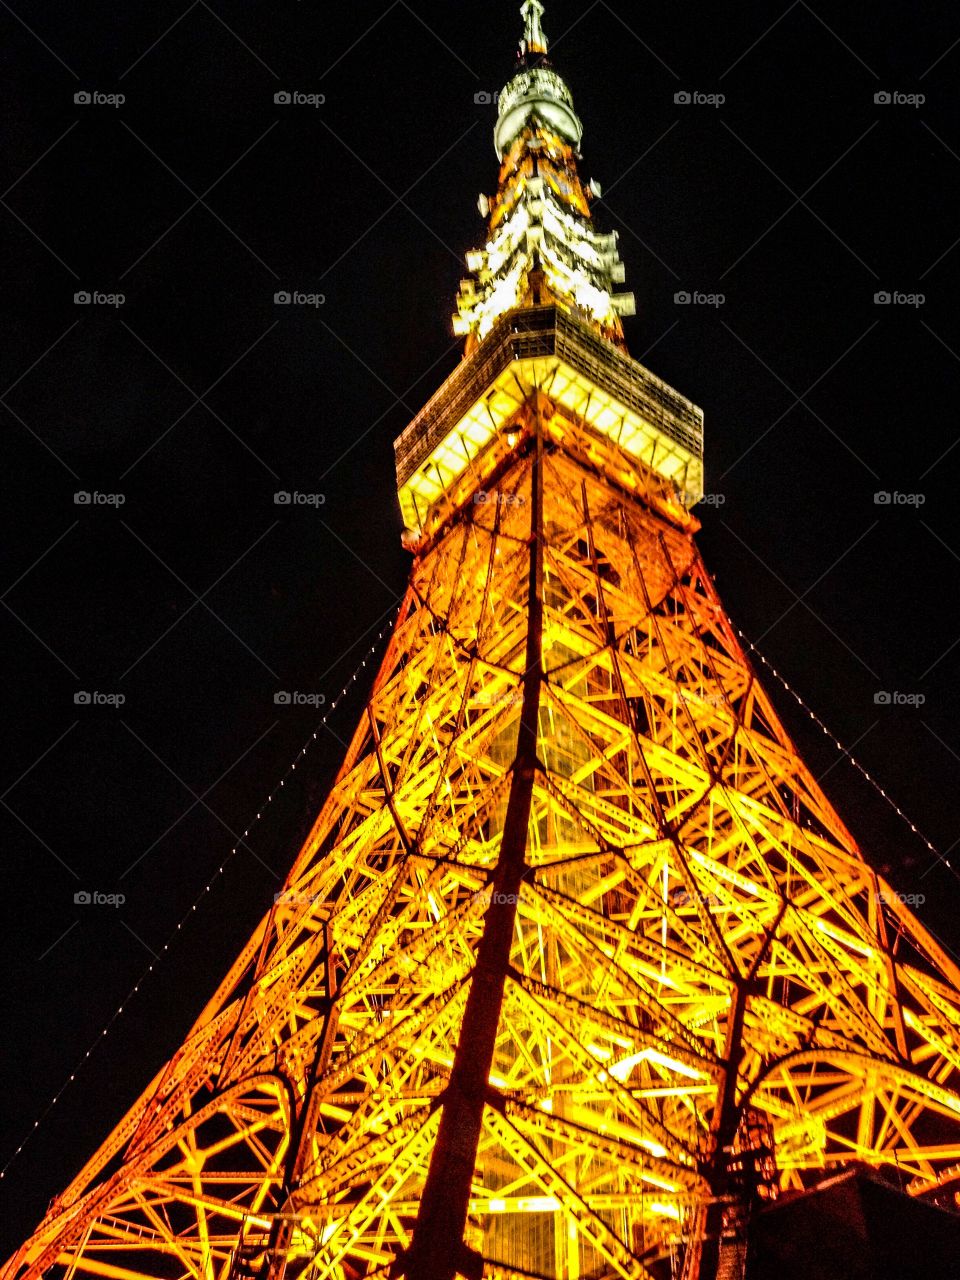 Tokyo Tower. Photo was taken in Tokyo Japan